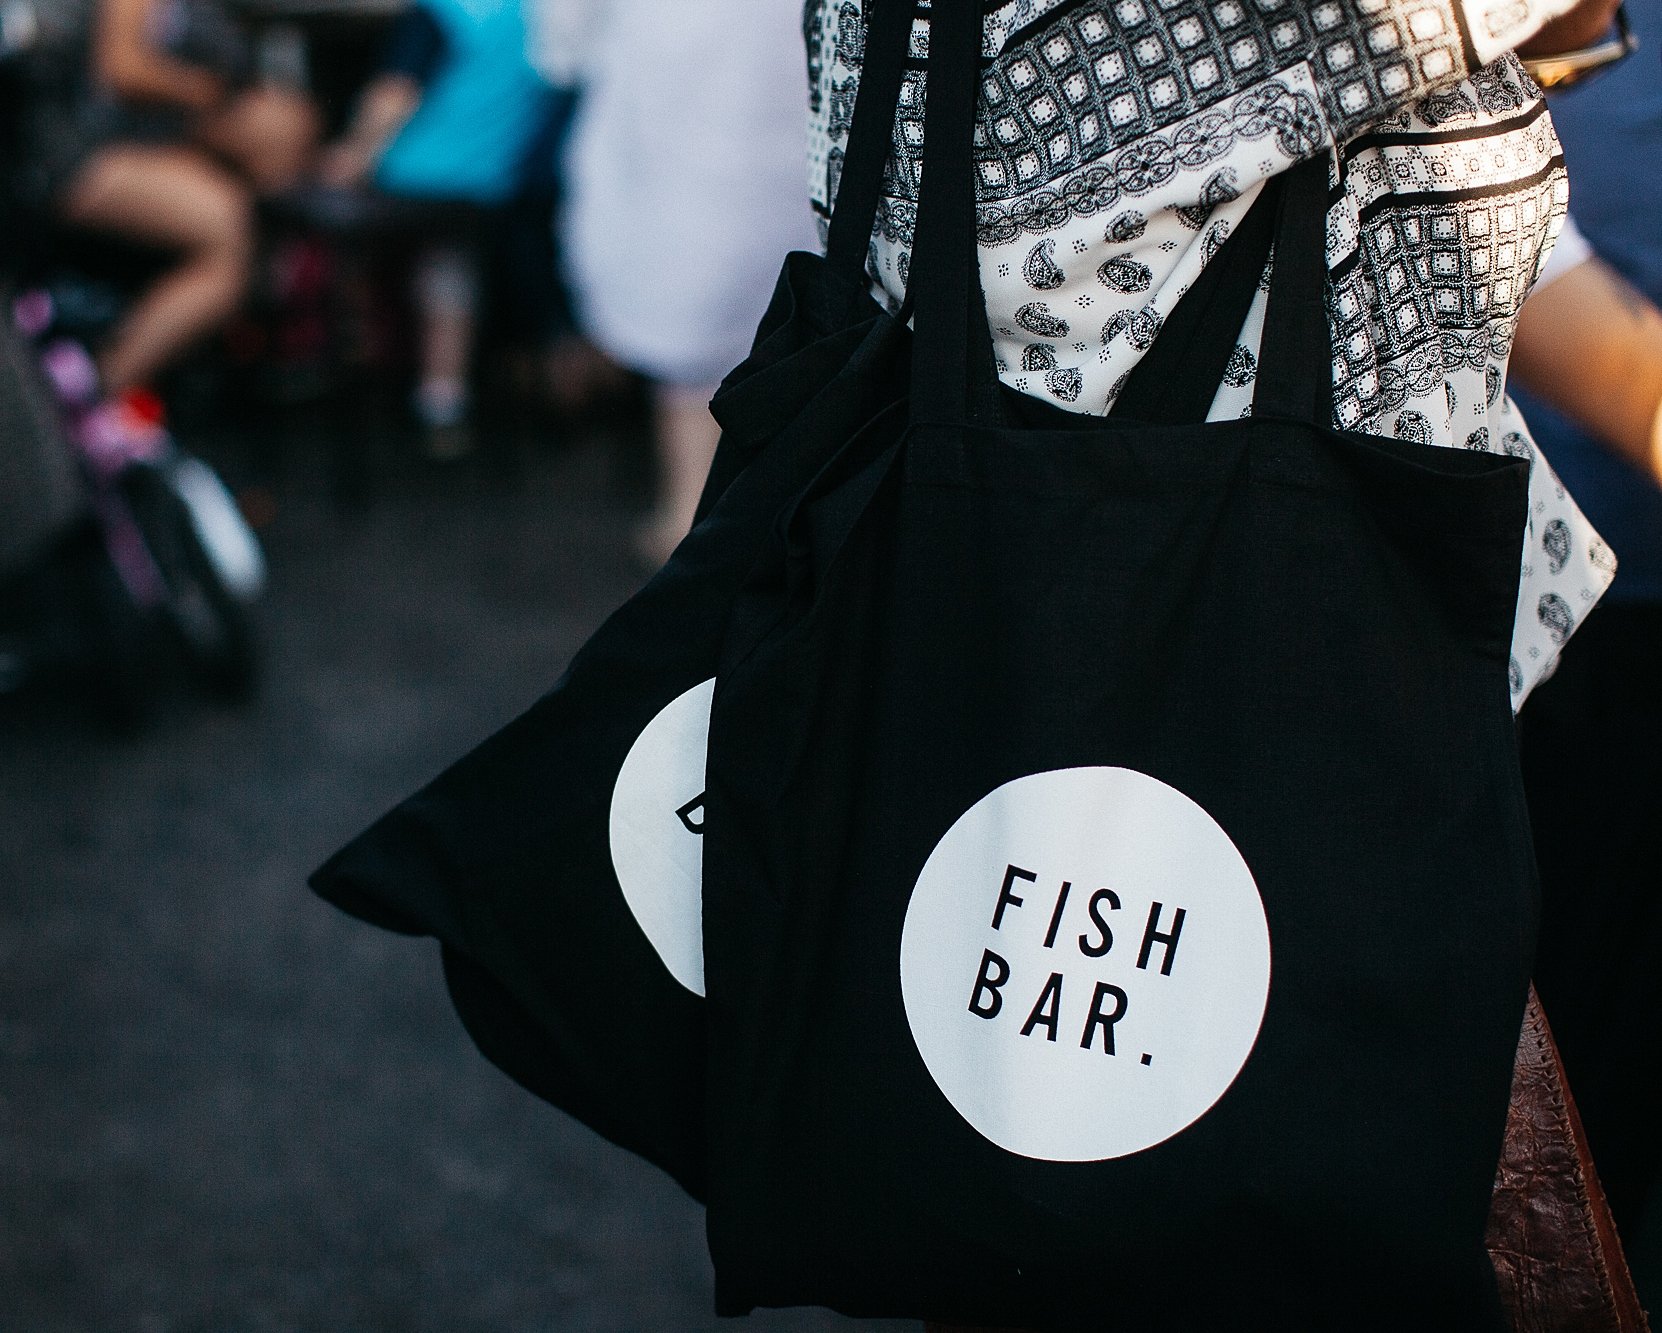 Fishbar, Complete Branding